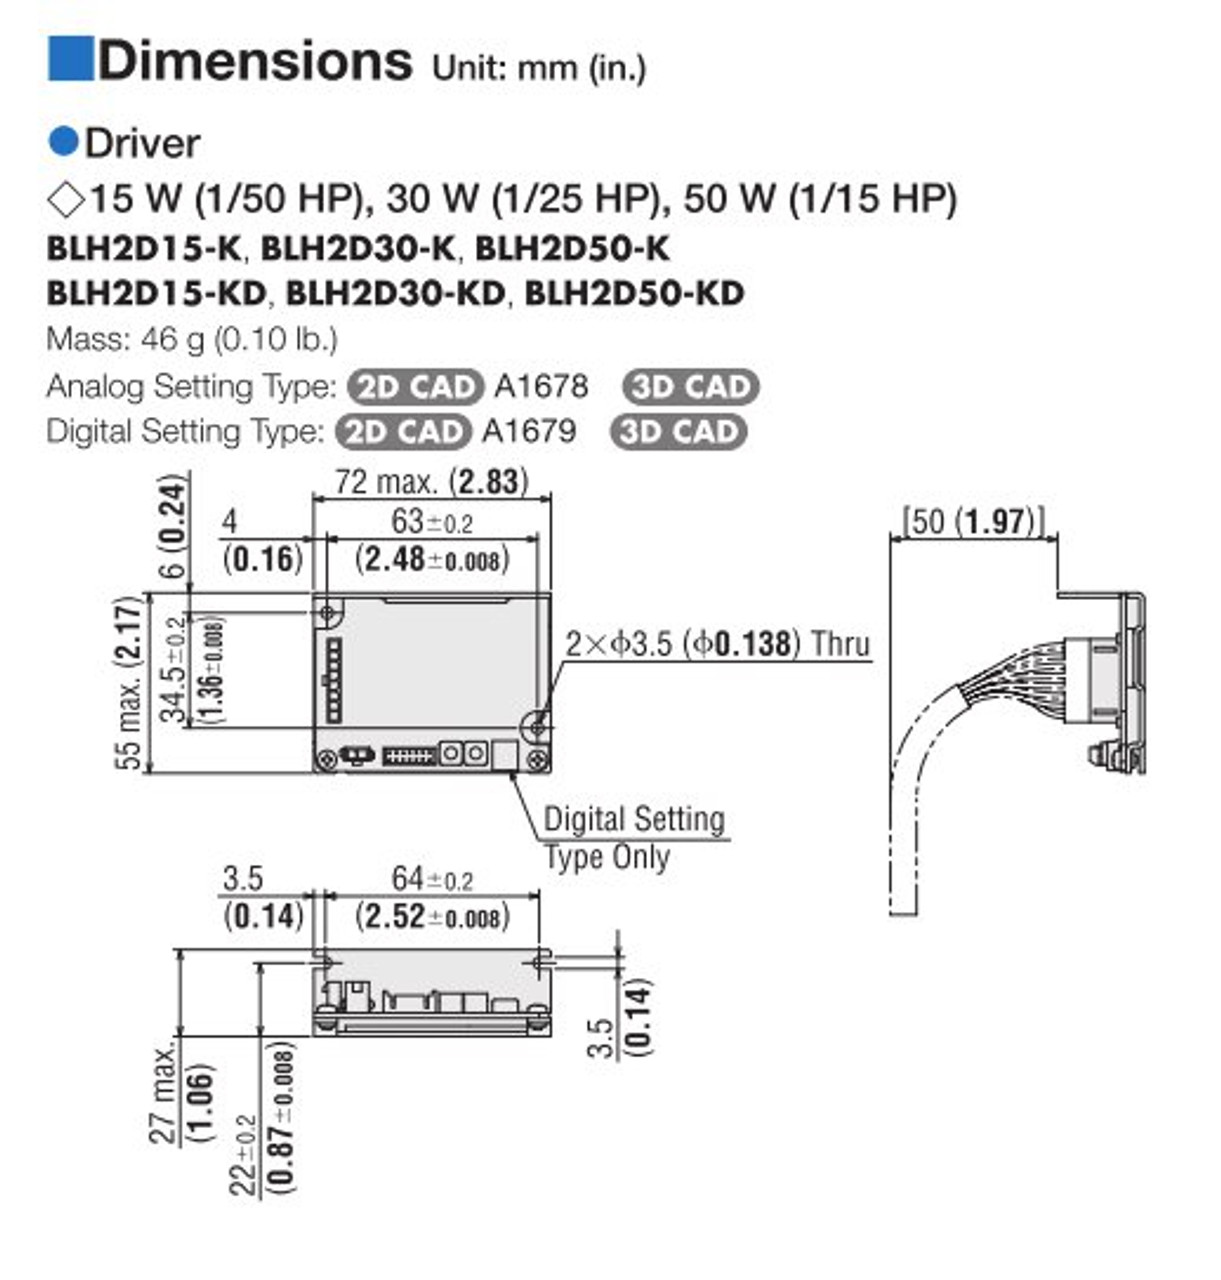 BLHM450KC-50 / BLH2D50-K - Dimensions